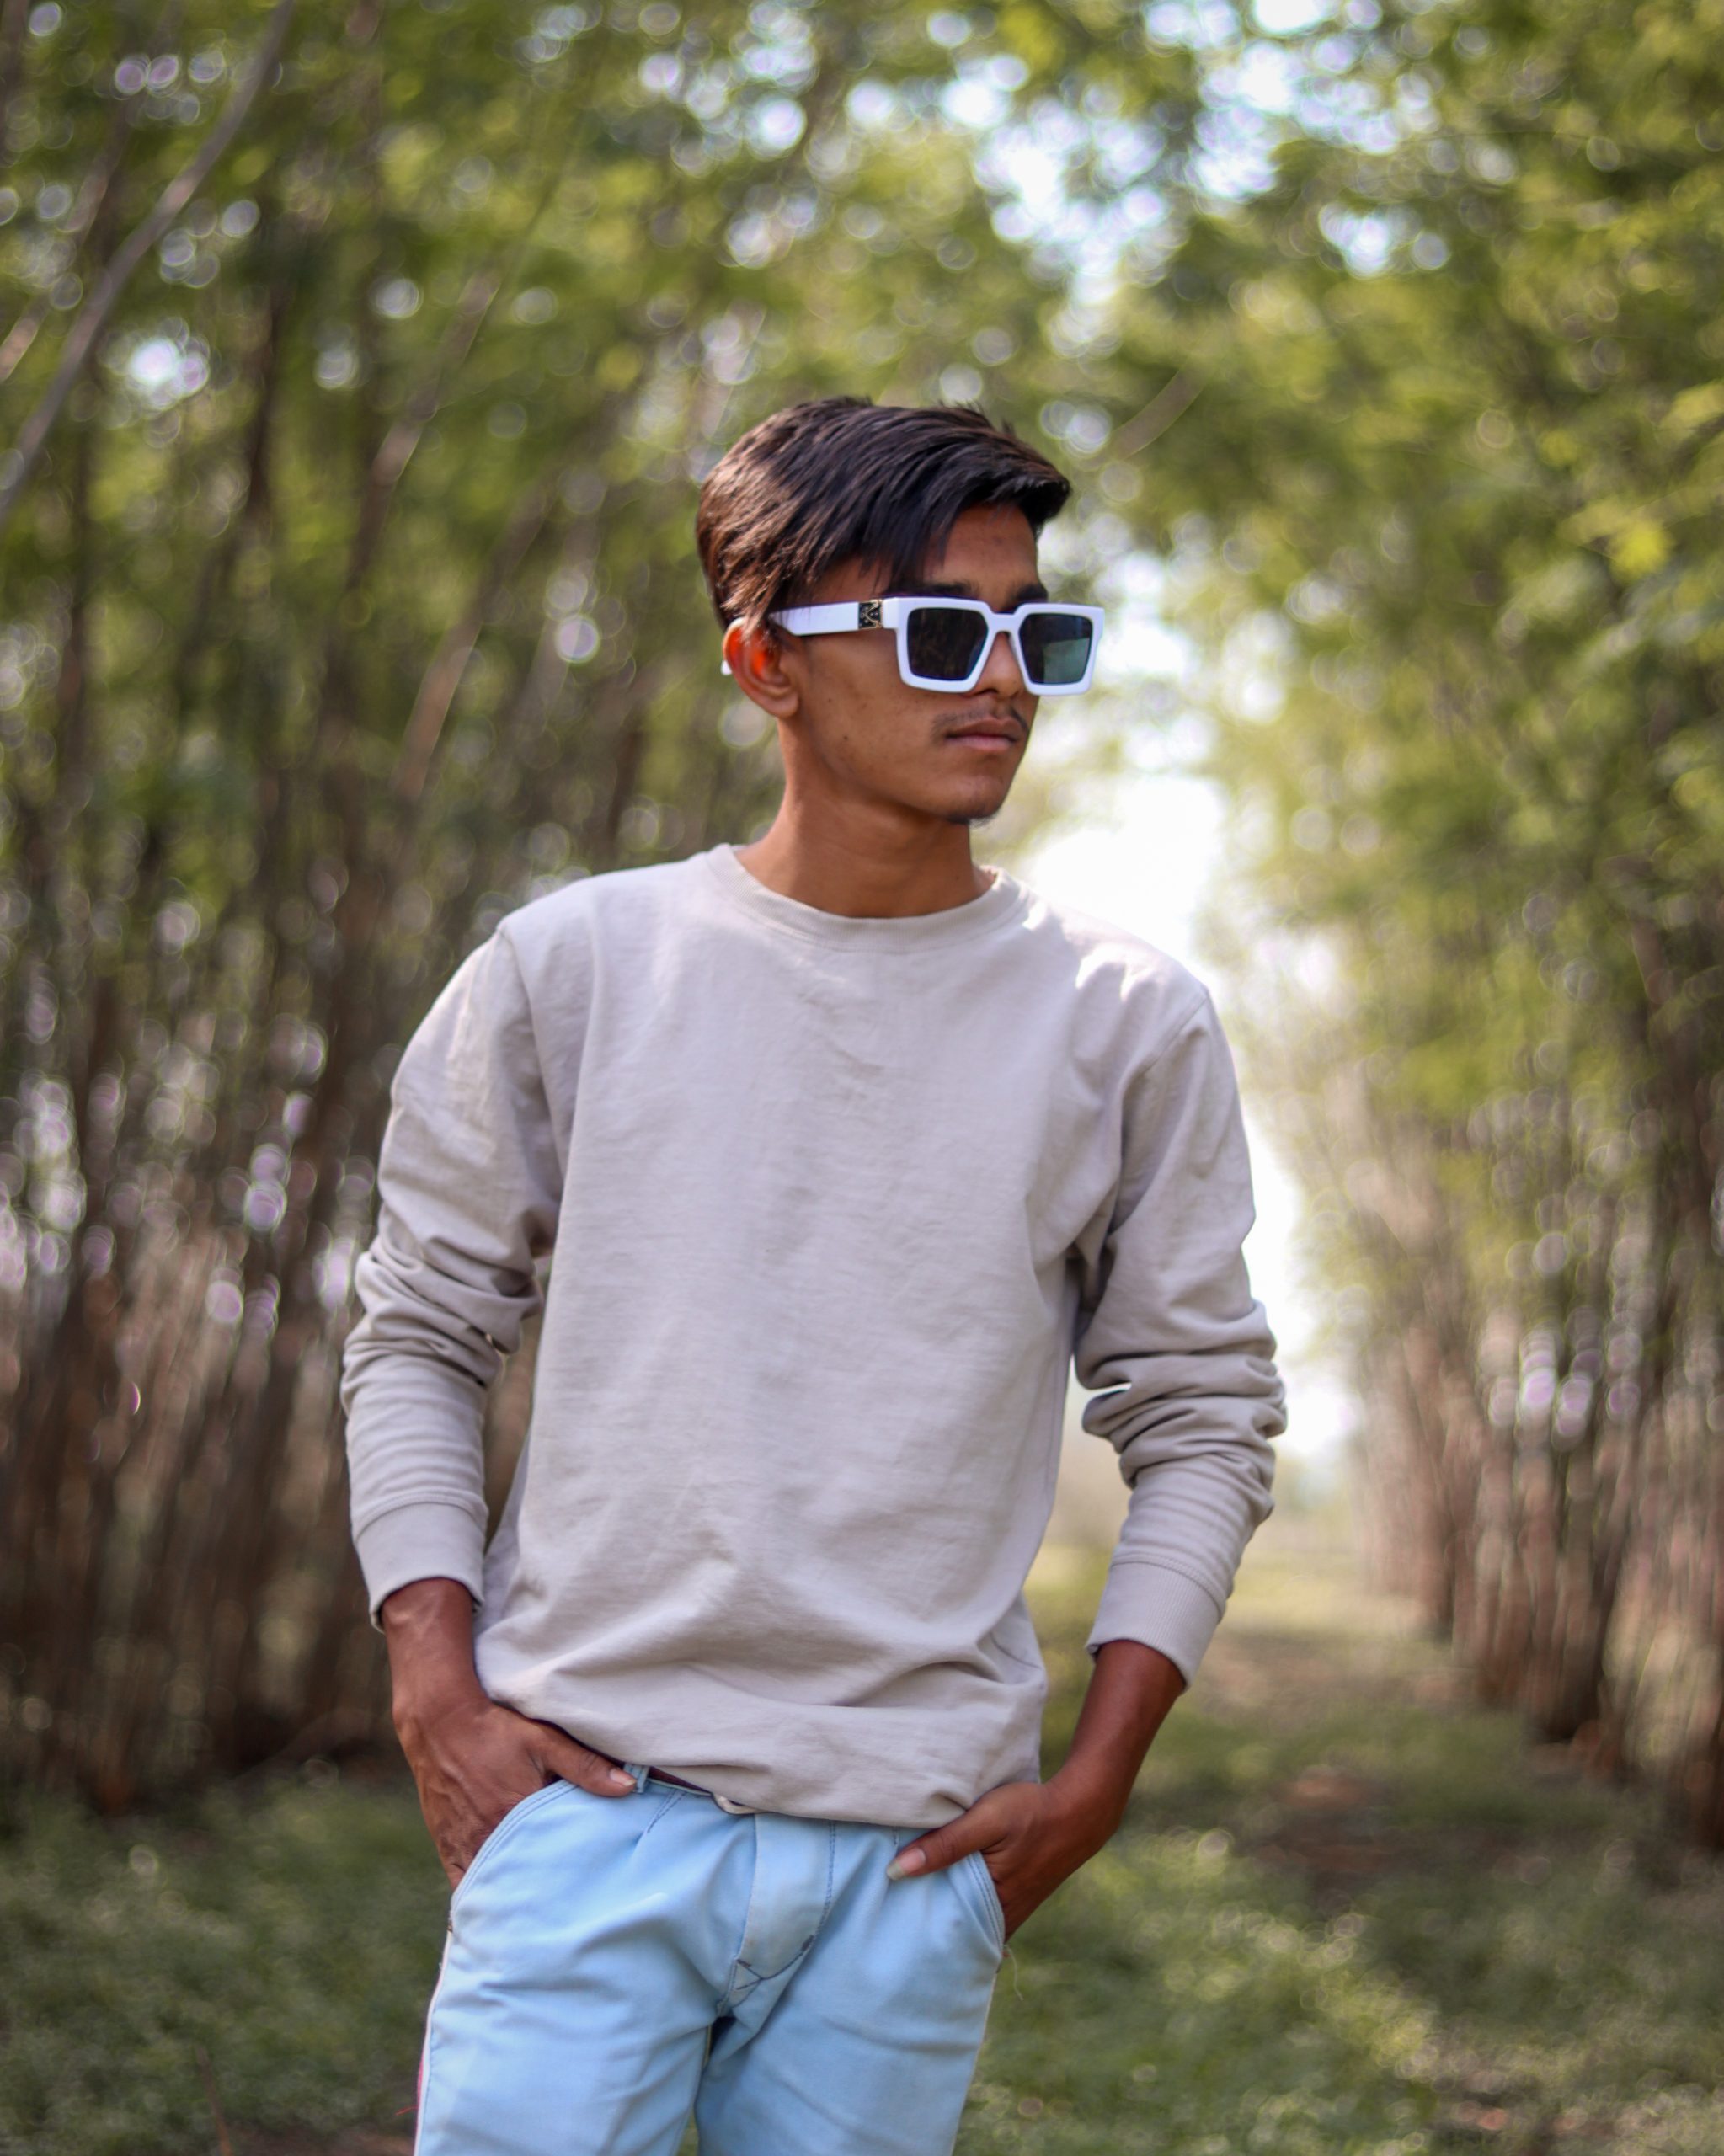 Stylish boy posing with sunglasses